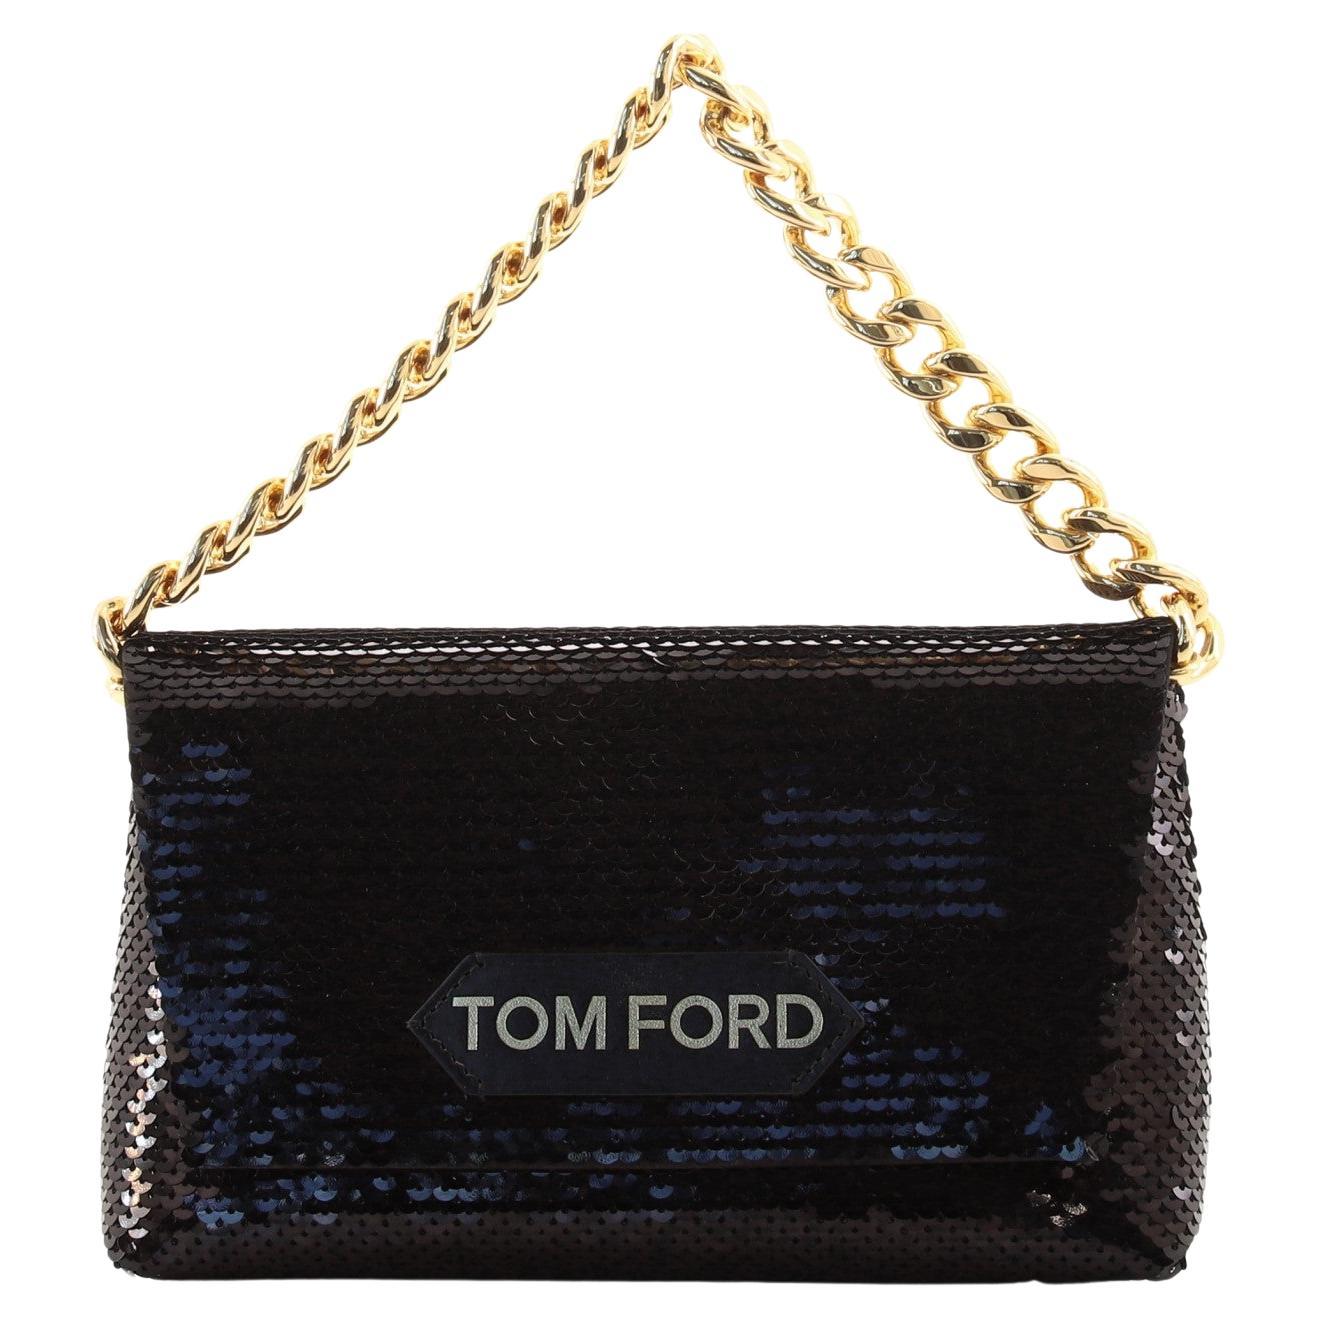 Tom Ford Label Flap Chain Clutch Sequins Mini